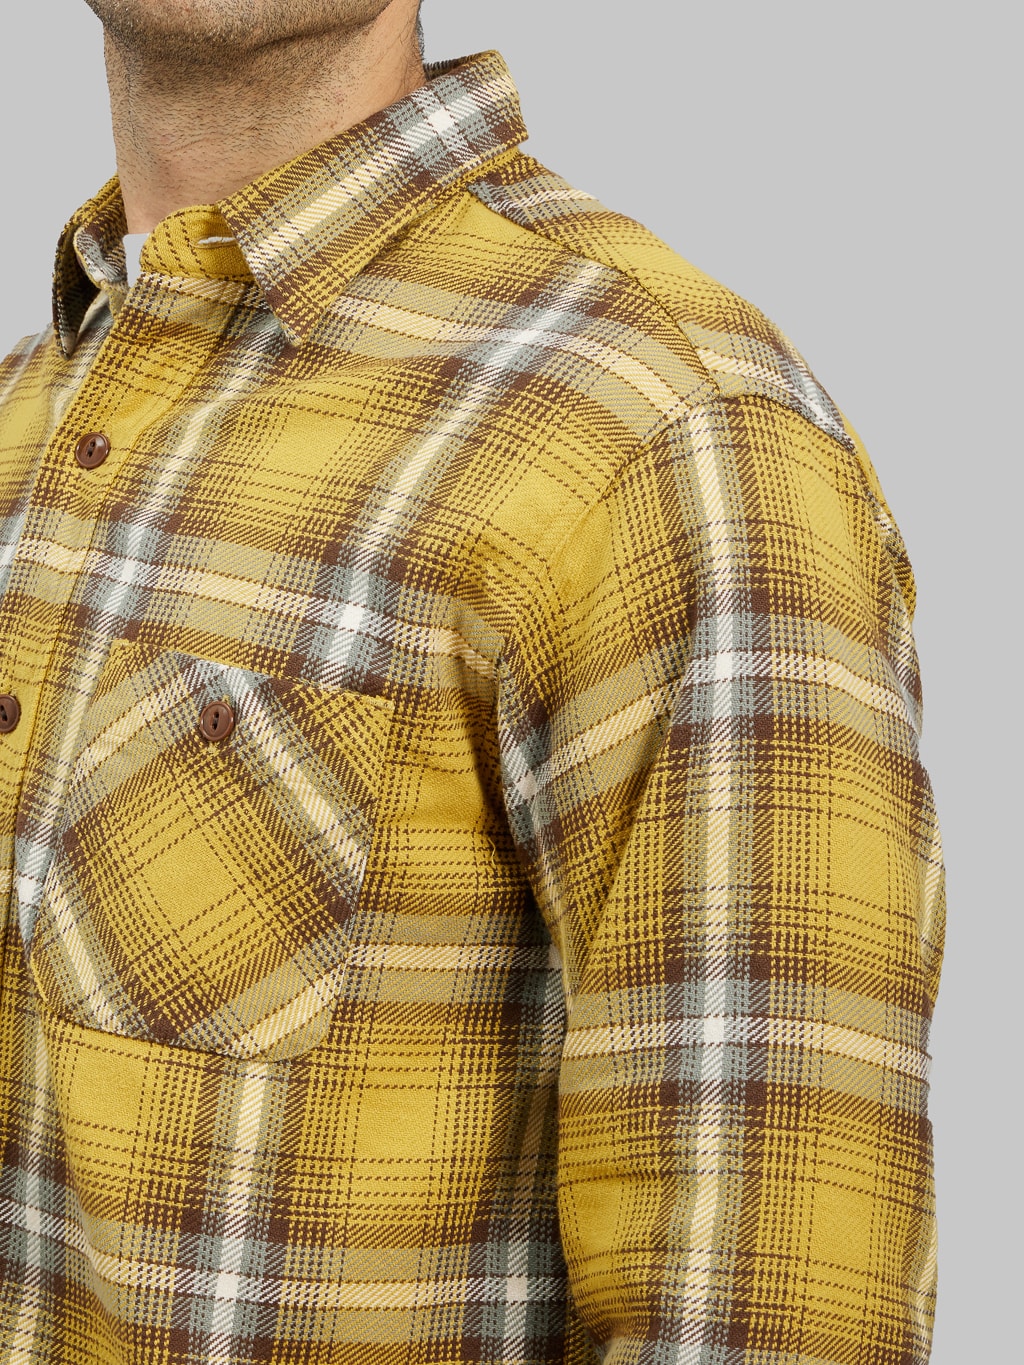 sugar cane twill check work shirt flannel yellow chest pocket